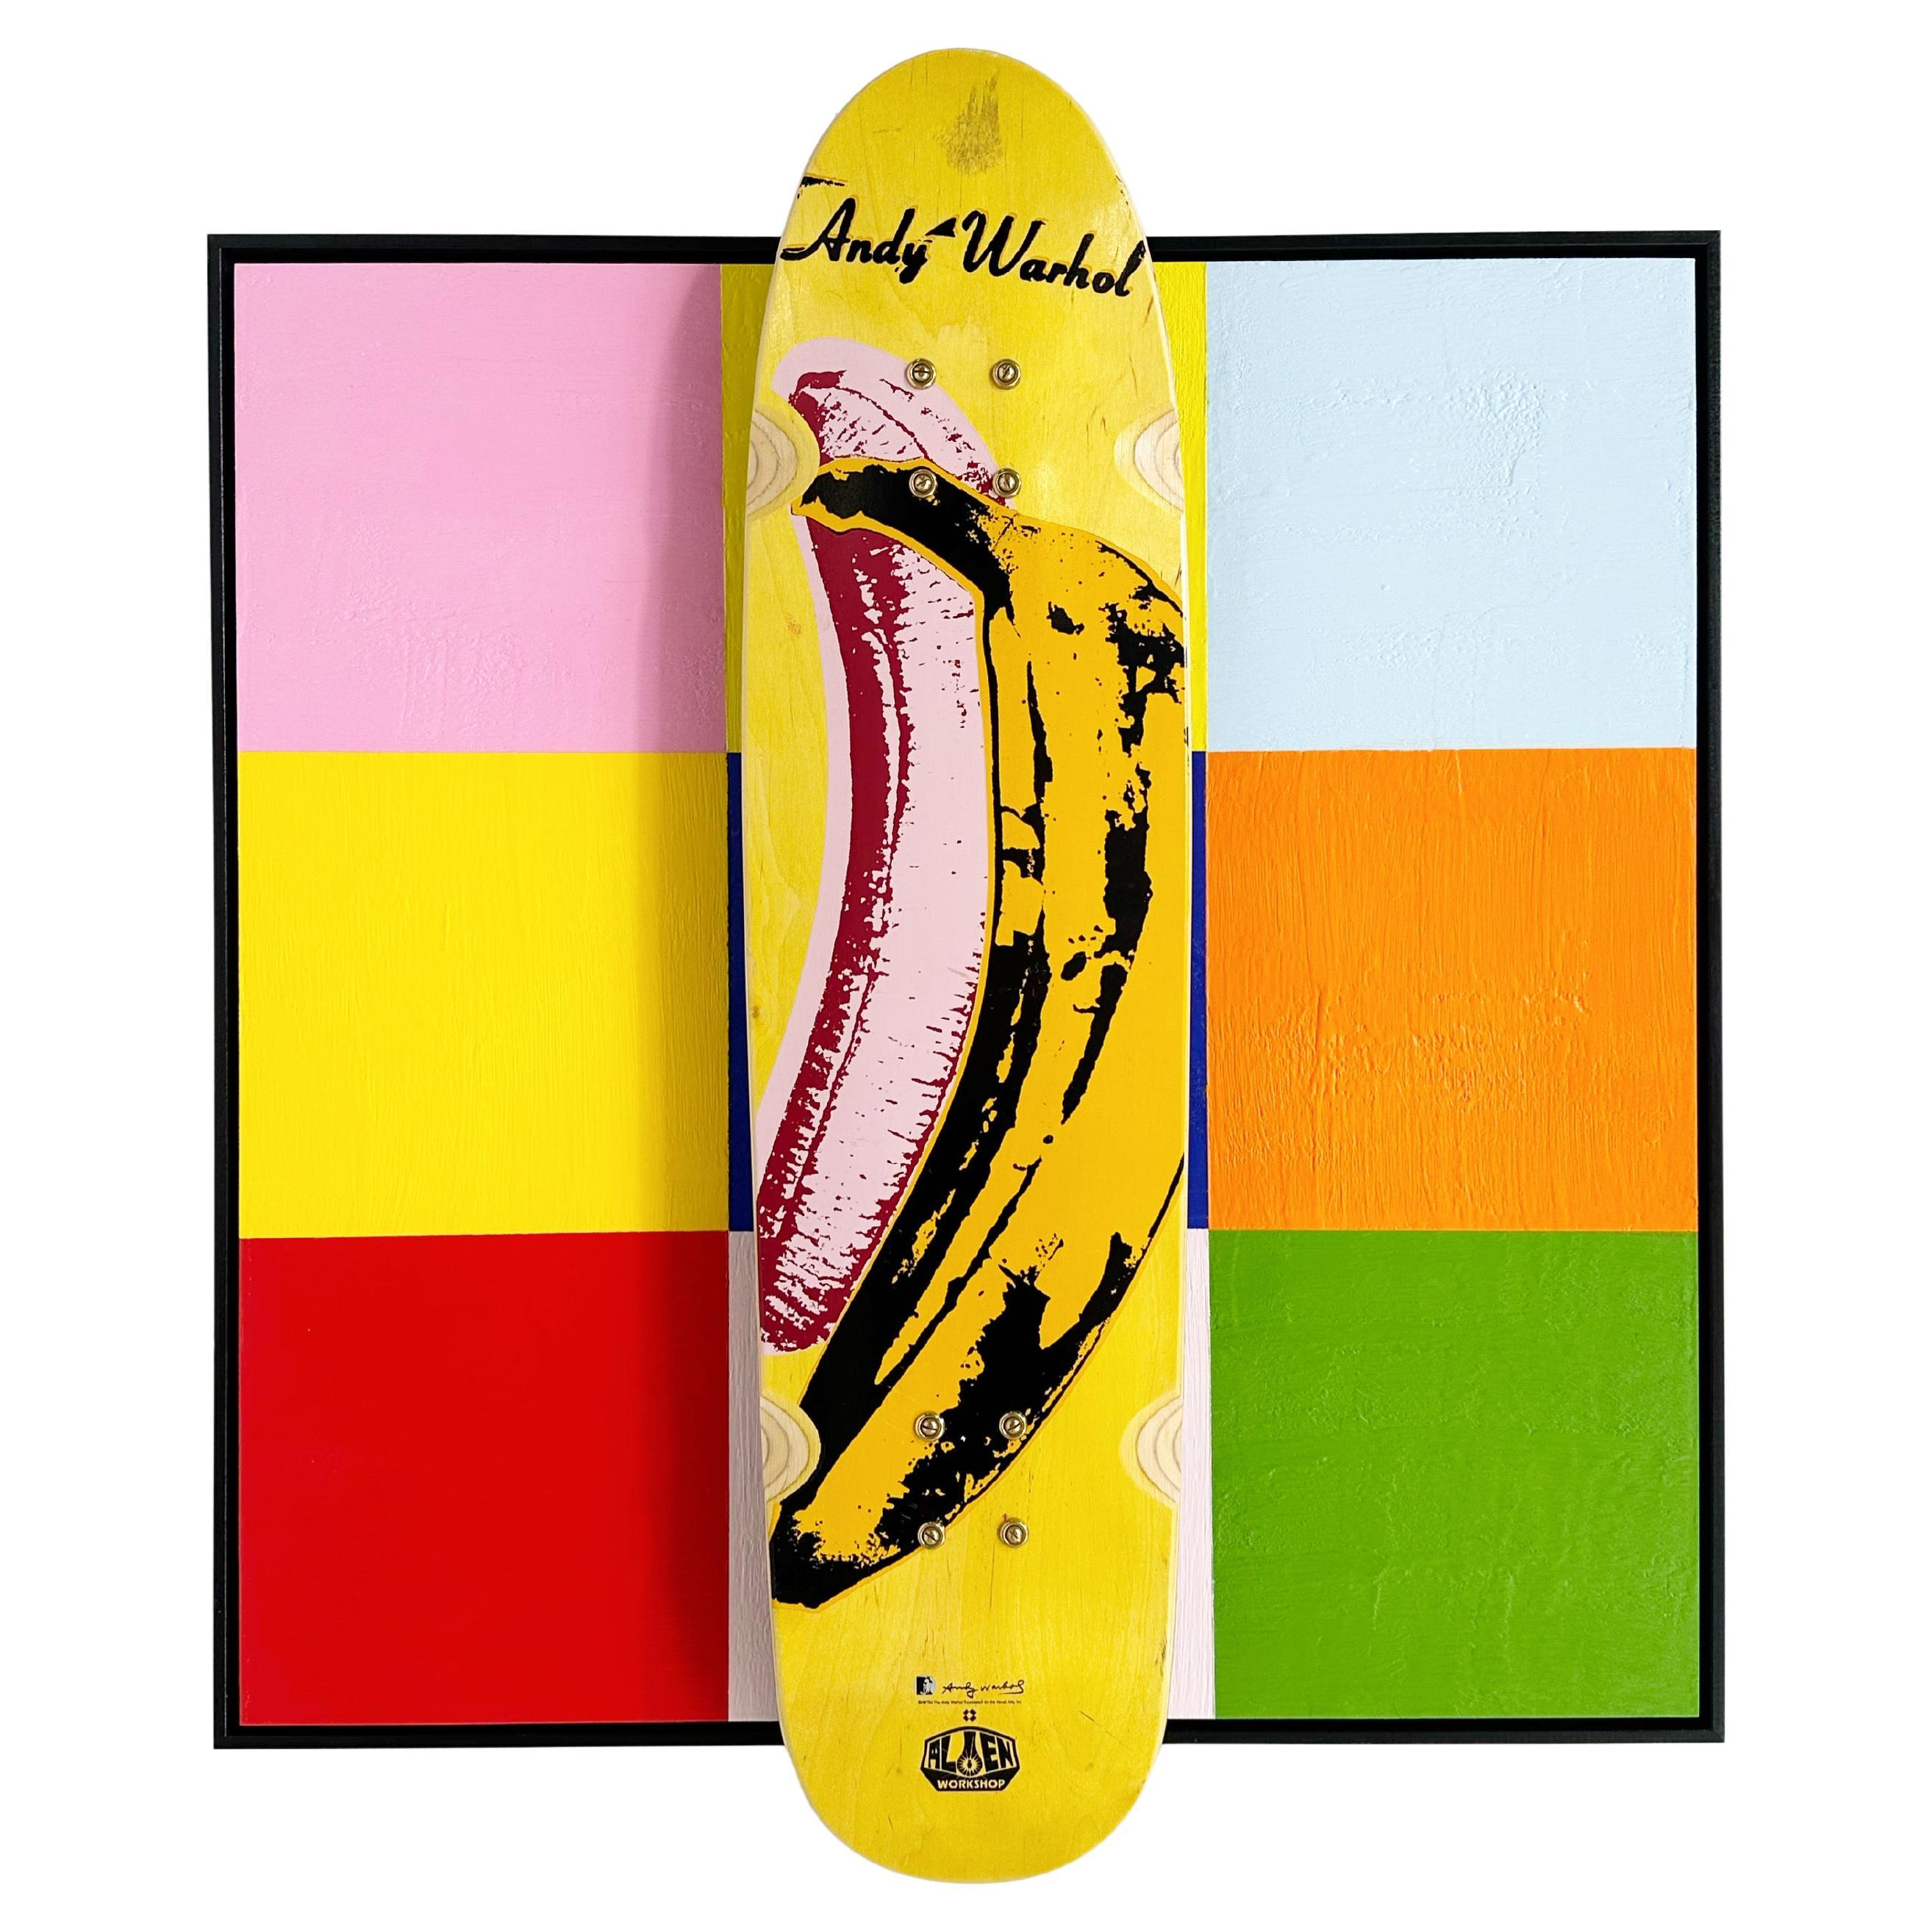 John O'Hara. Banana, 2023, peinture d'un pont à l'encaustique et de patins